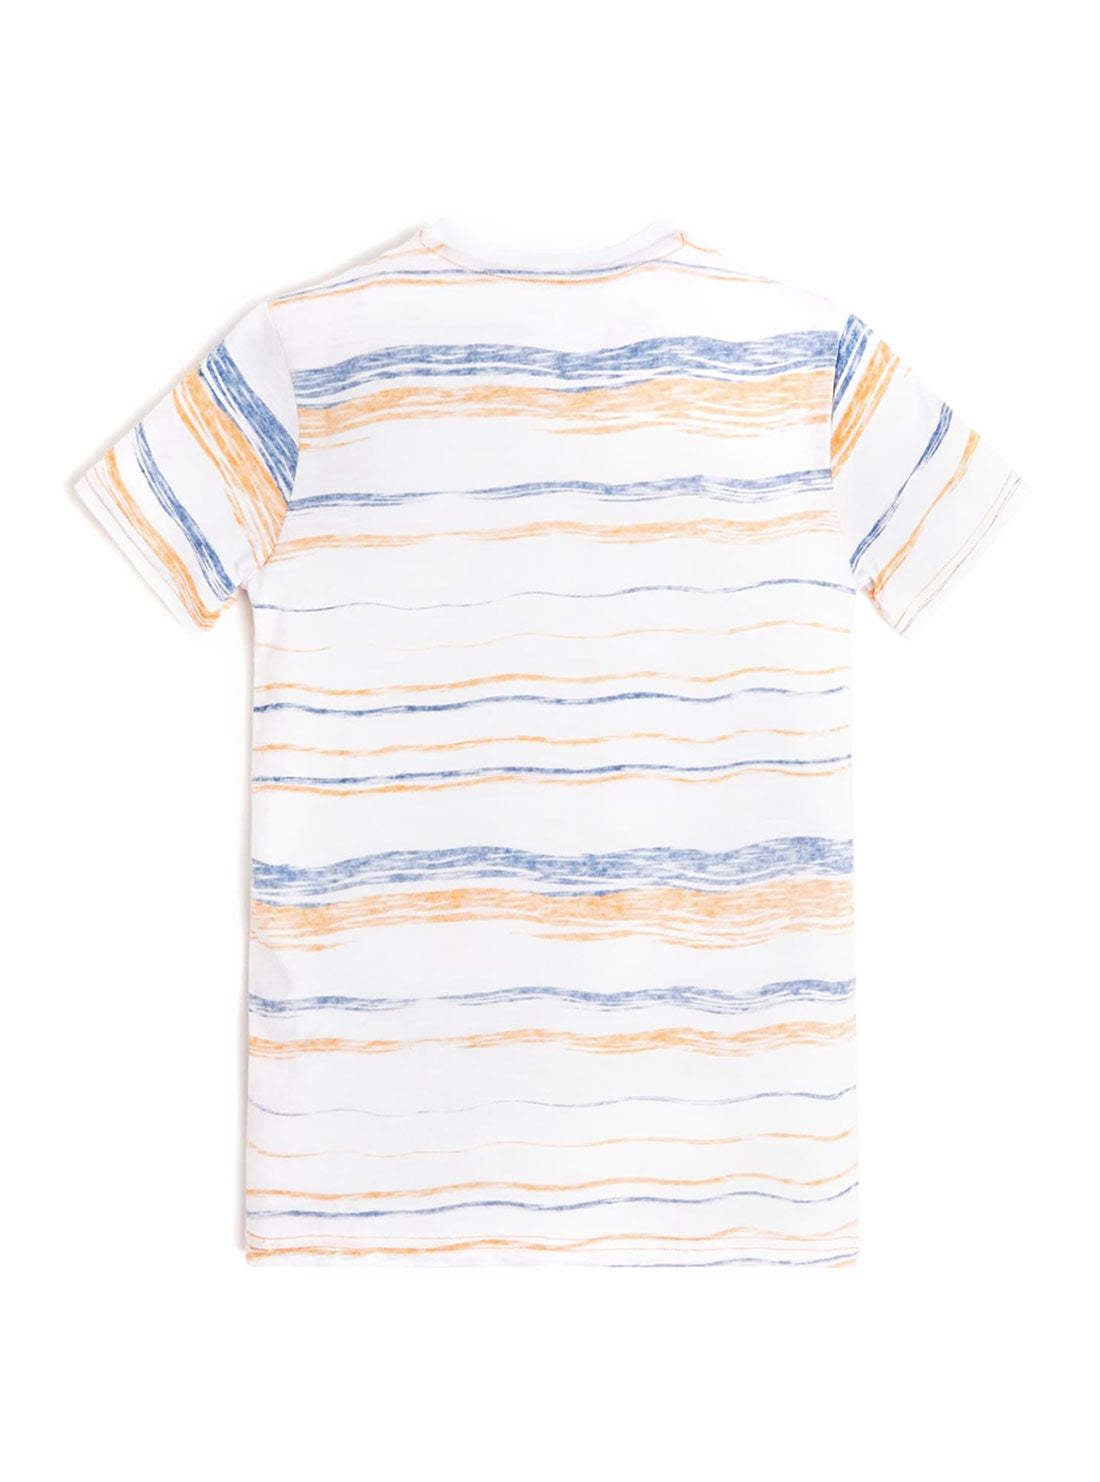 Boy's Eco Orange Stripe White V-neck T-Shirt back view